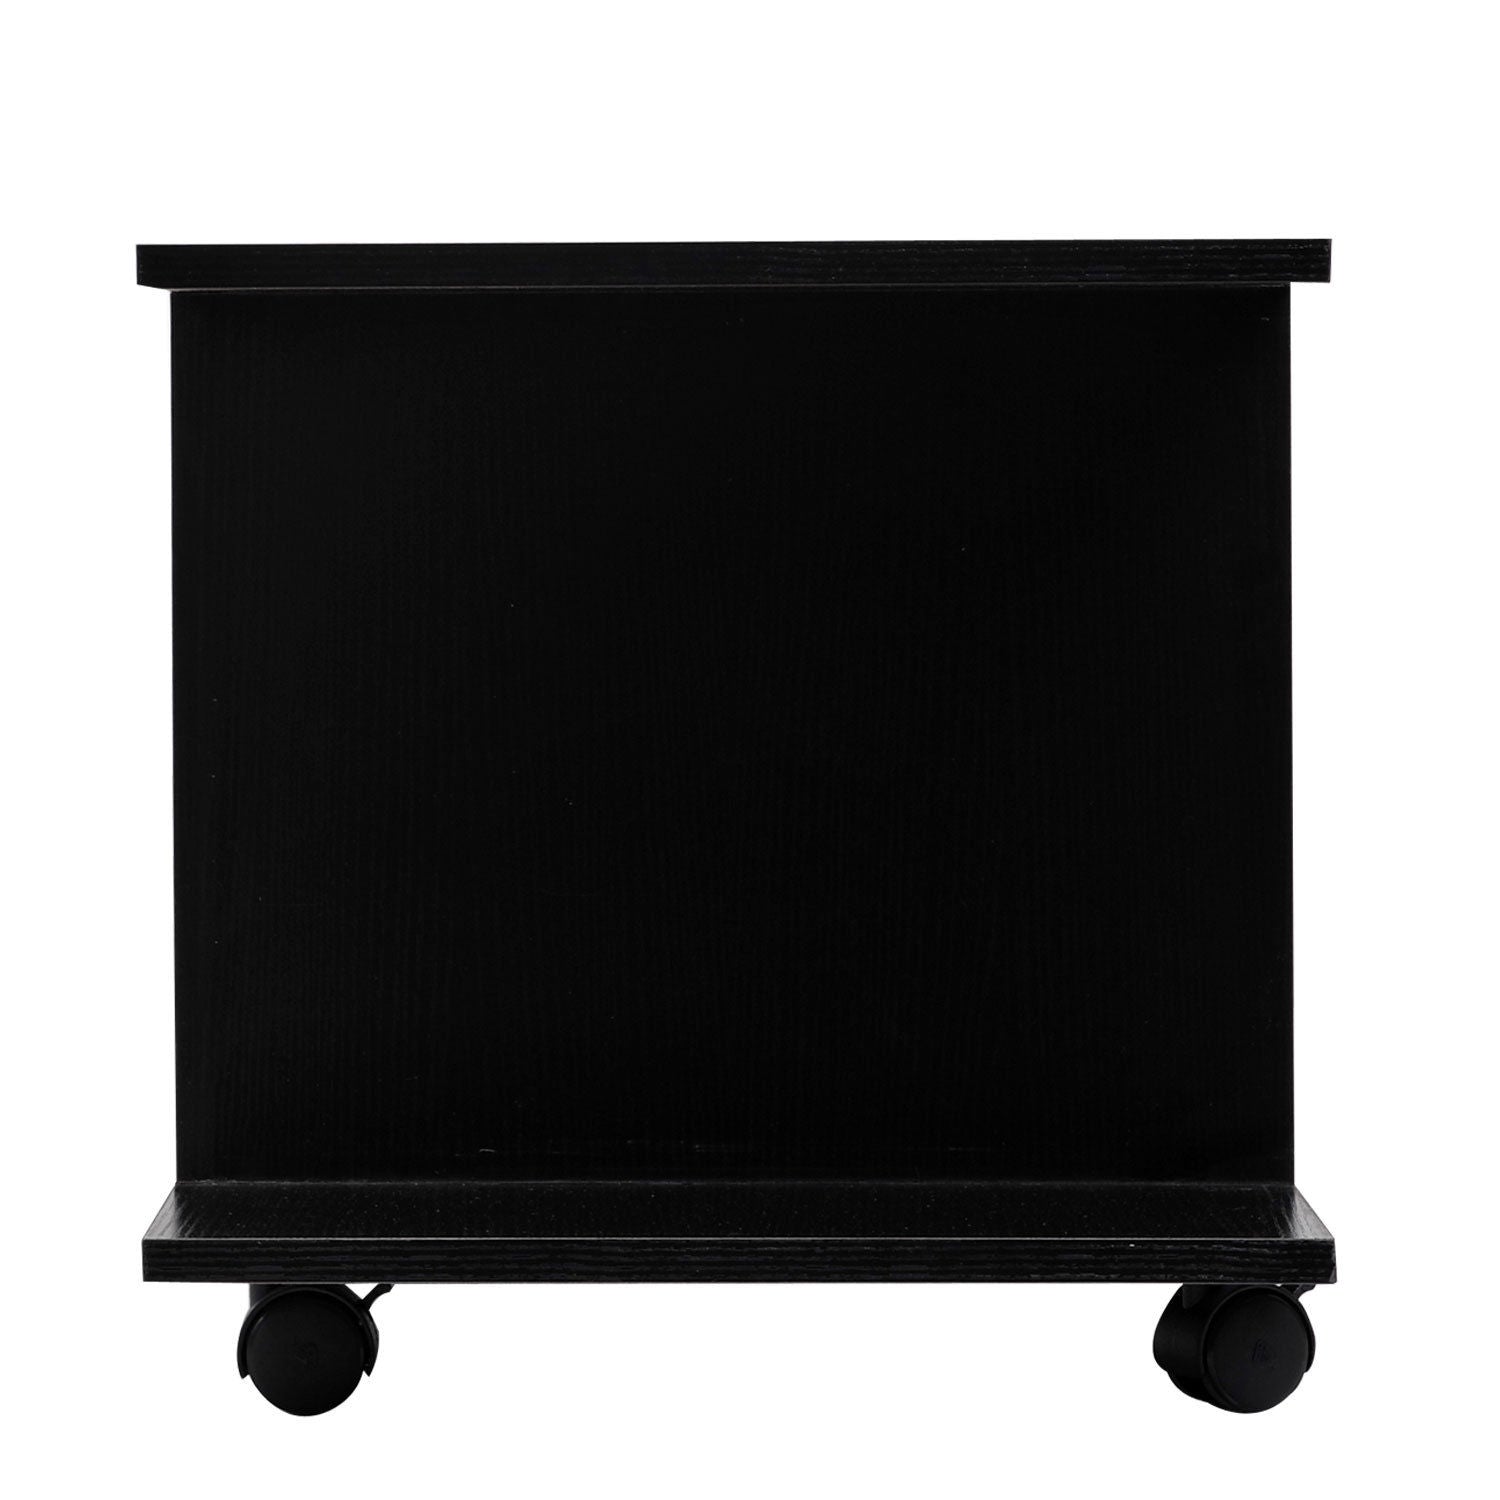 Modern TV Stand with Storage Shelves, TV Table, Sleek Design for Living Rooms, Space-Saving, Black, HOMCOM, 8